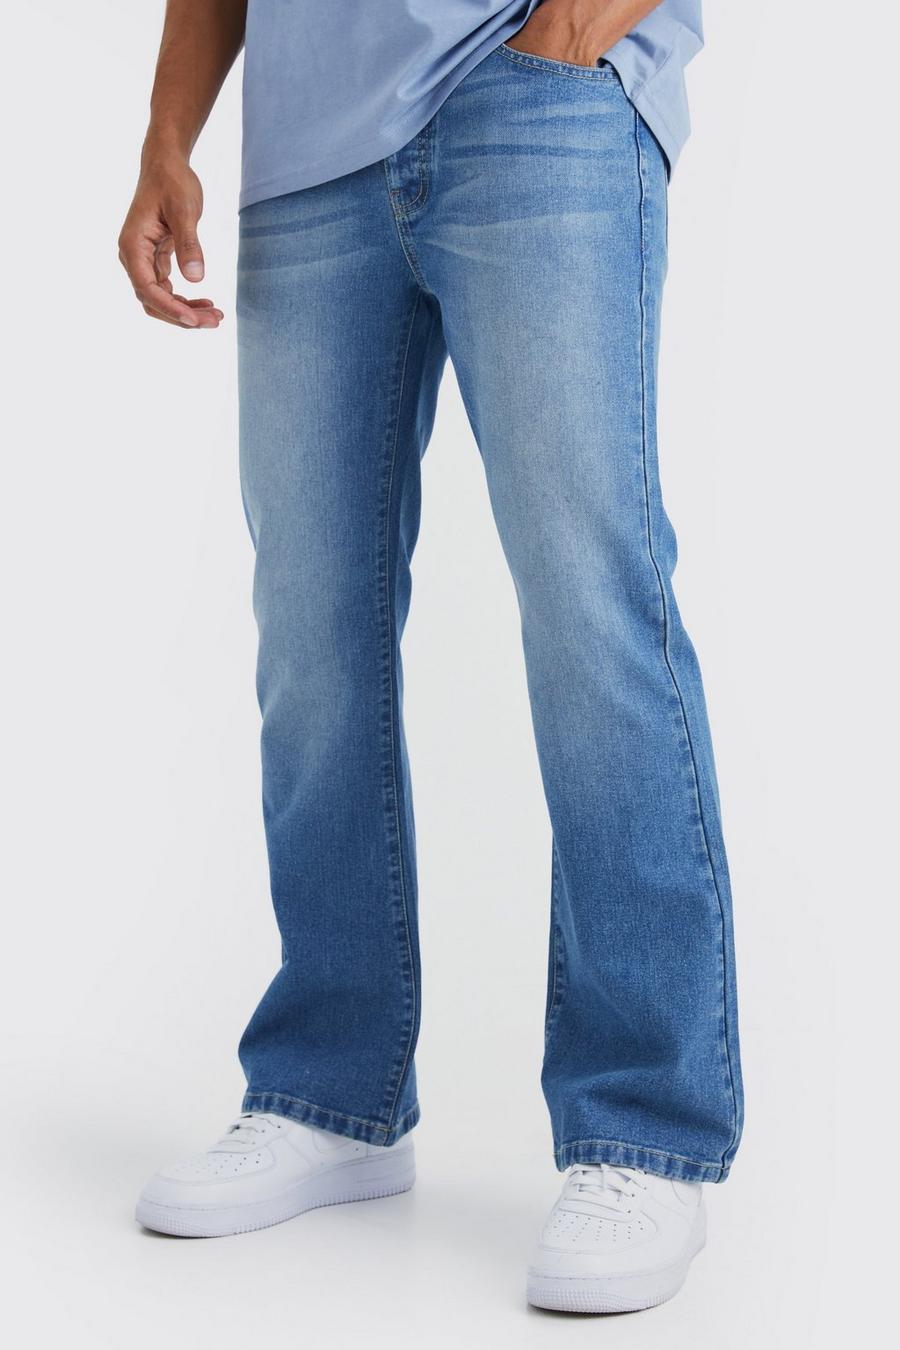 Ultimate Denim Flare Jeans - Ultimate Denim Flare Jeans